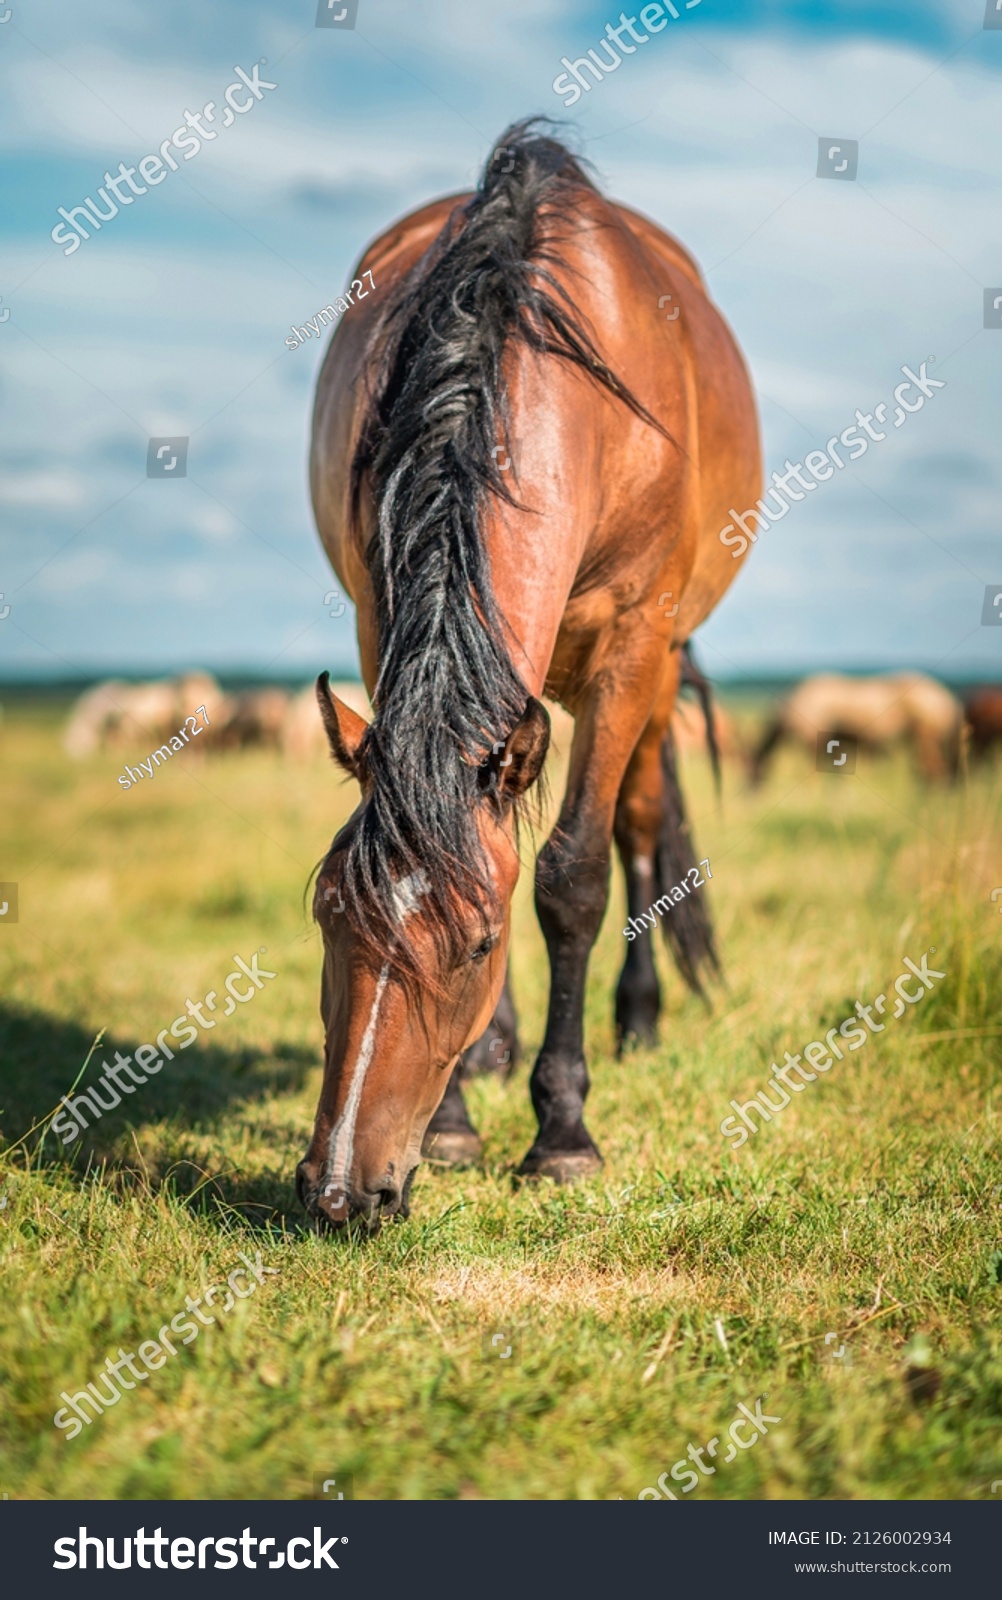 Thoroughbred horses graze on a summer farmer's field. #2126002934